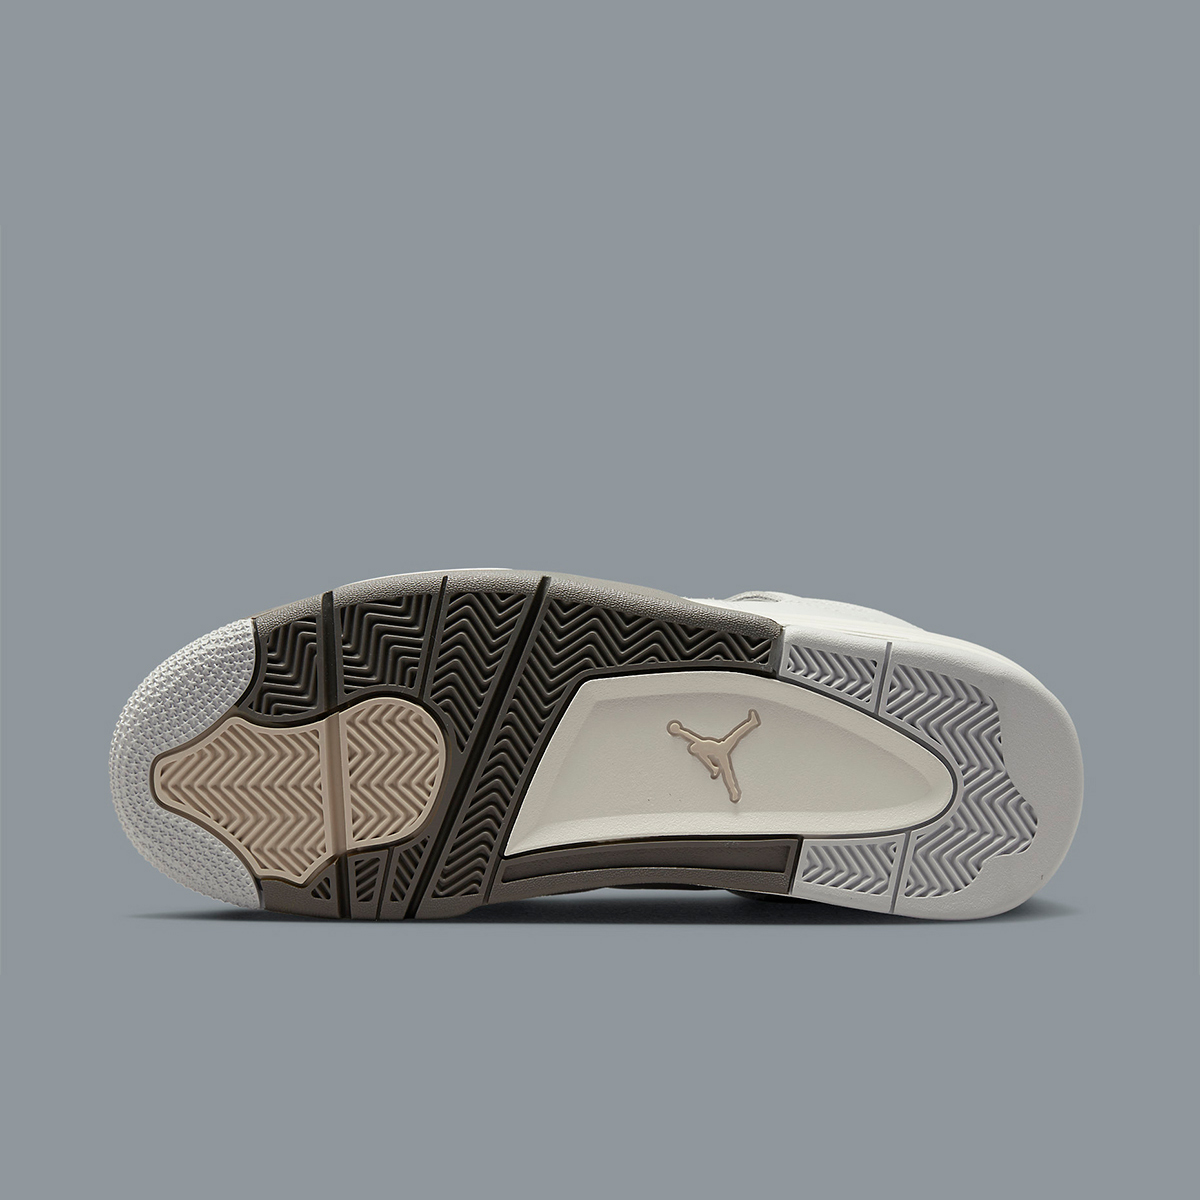 JustFreshKicks on X: Louis Vuitton x Nike Dunk Low Boro customs